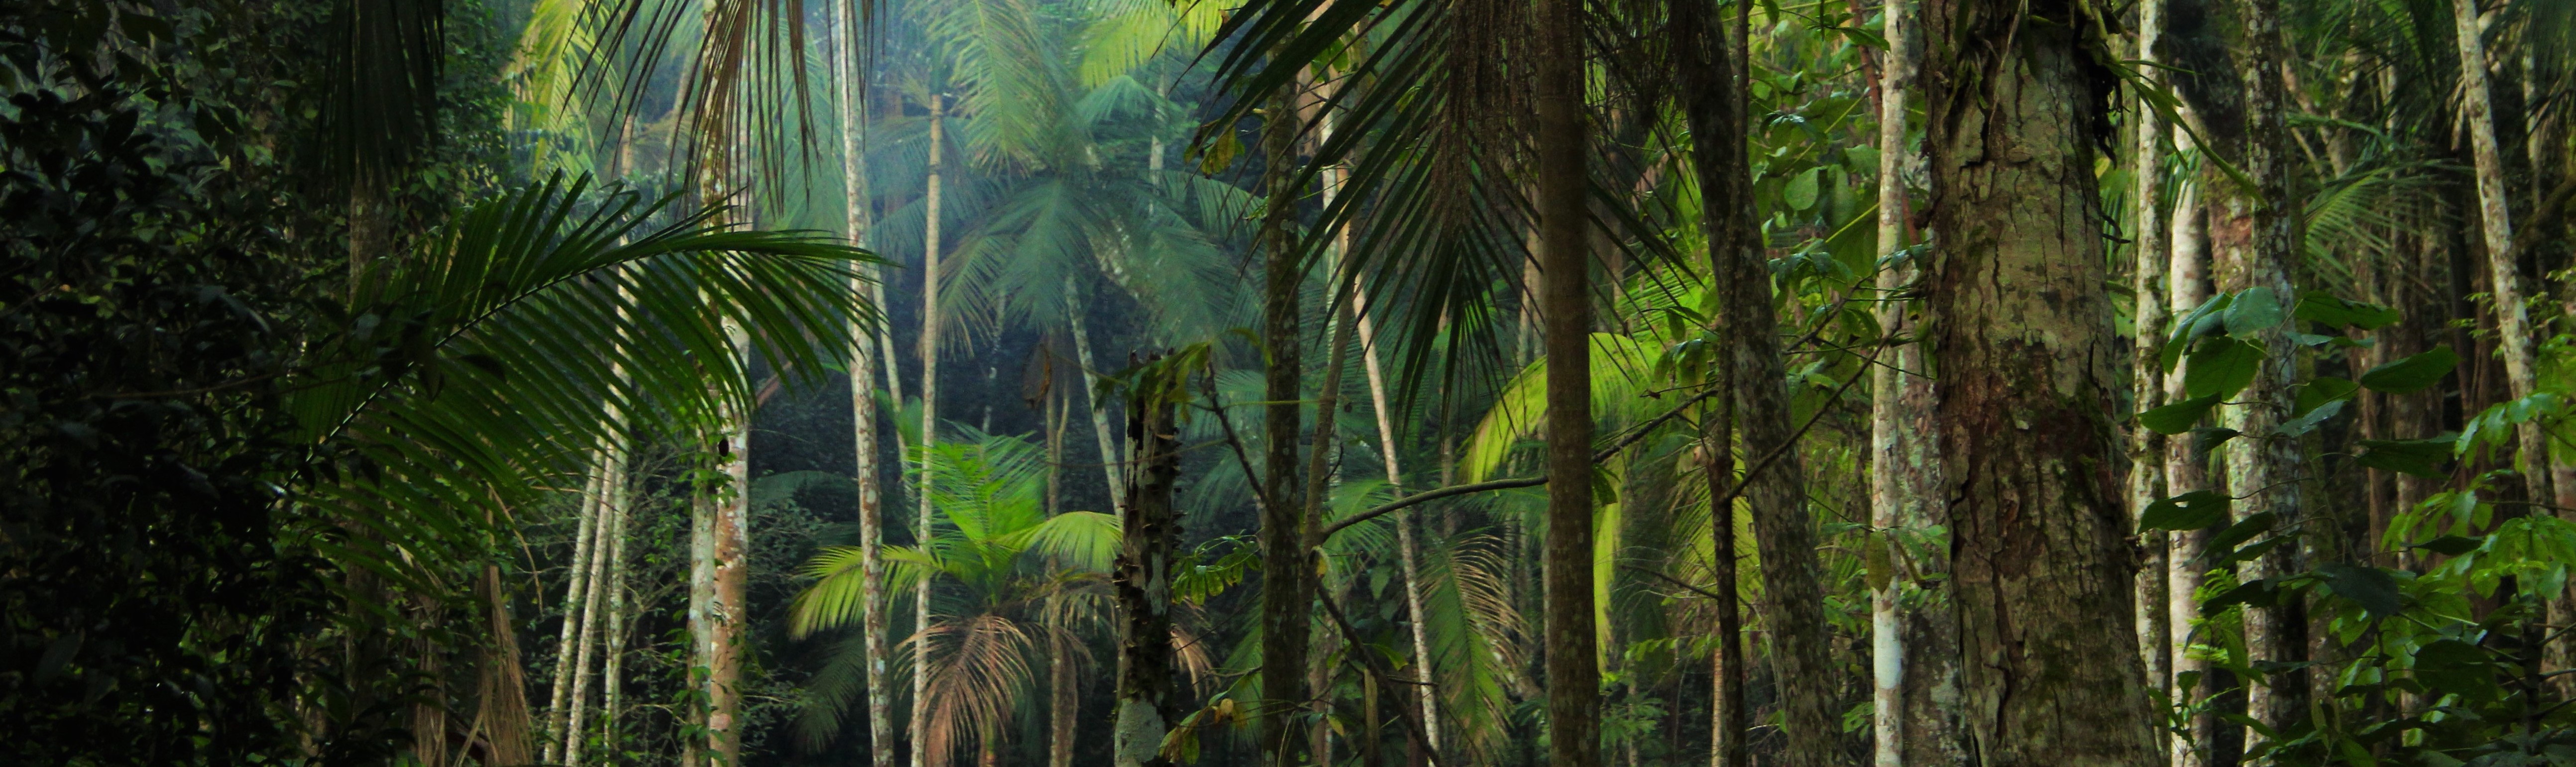 Iguazu immersion jungle Argentine Brésil Voyage Tierra Latina forêt palmiers